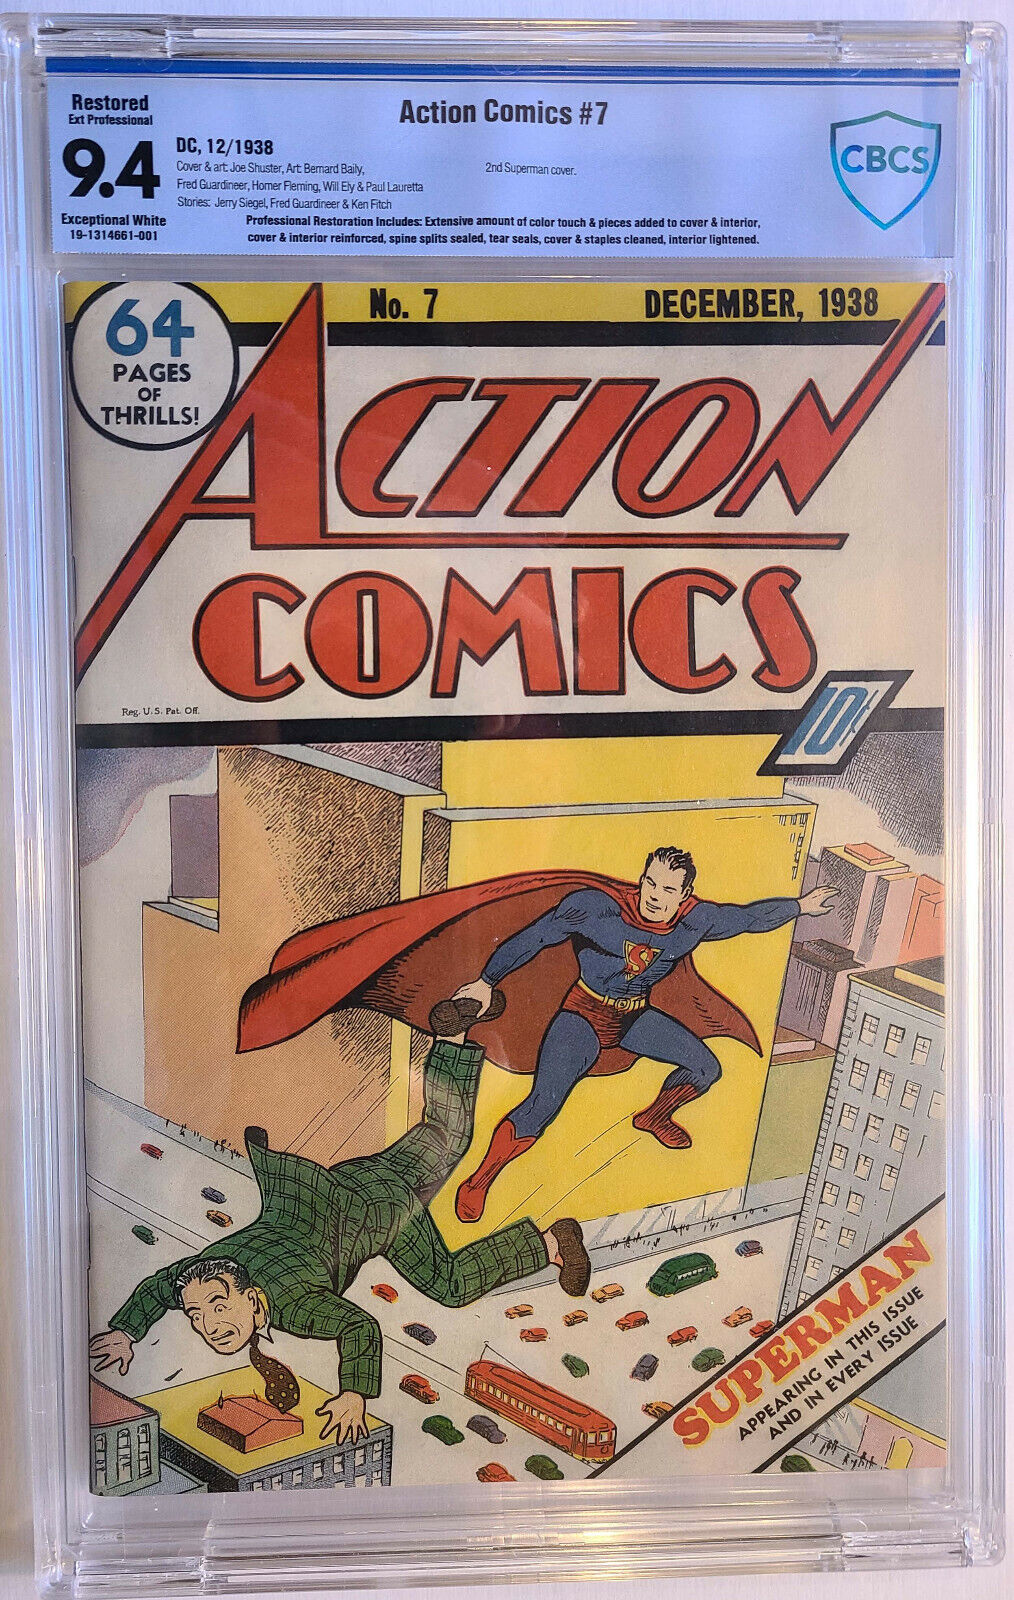 Action Comics #7 CBCS 9.4 (R) Siegel, Shuster, Guardineer, 2nd Superman Cover